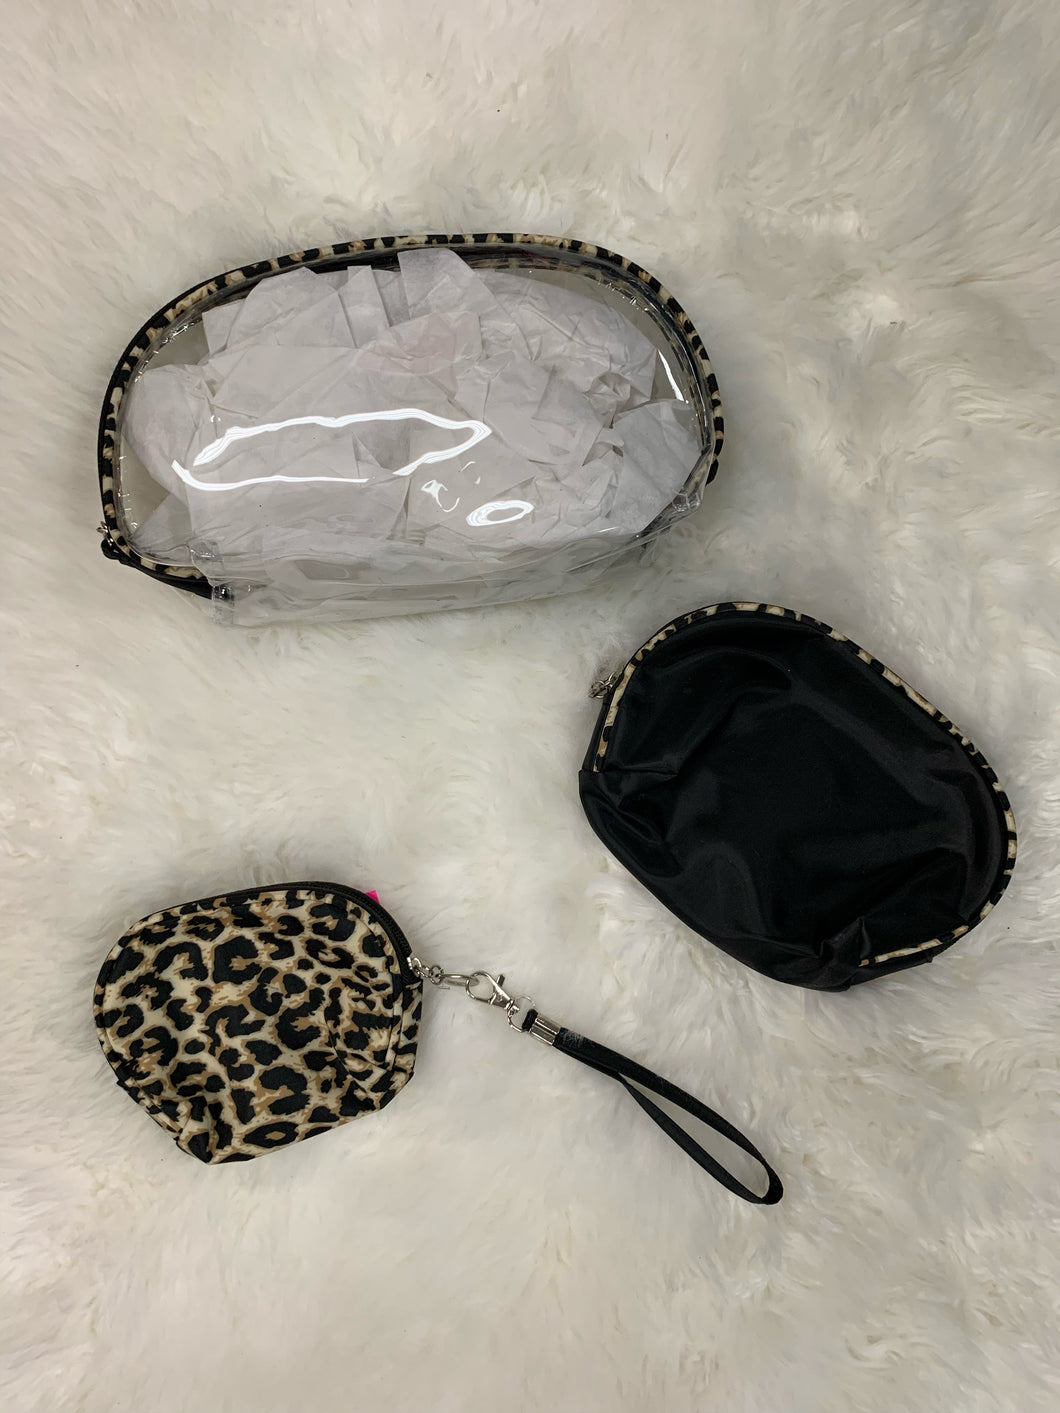 Leopard Bags - Handbags for Makeup